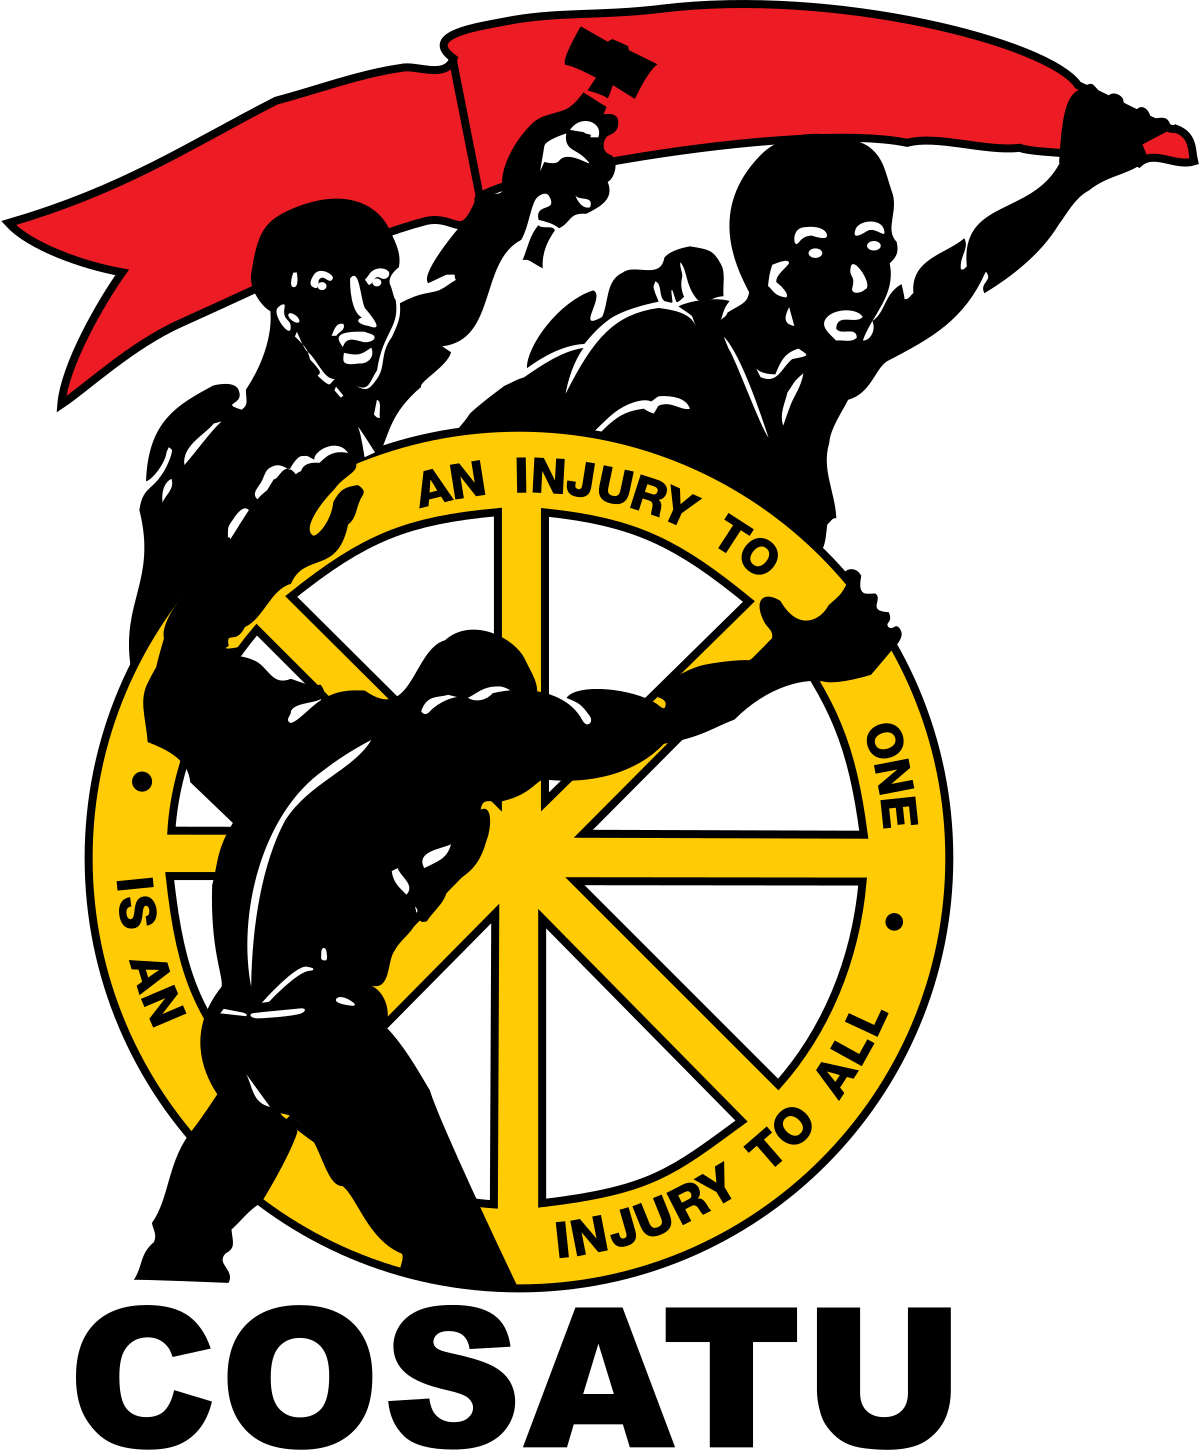 Congress of South African Trade Unions (COSATU) / National Labour and Economic Development Institute (Naledi), South Africa